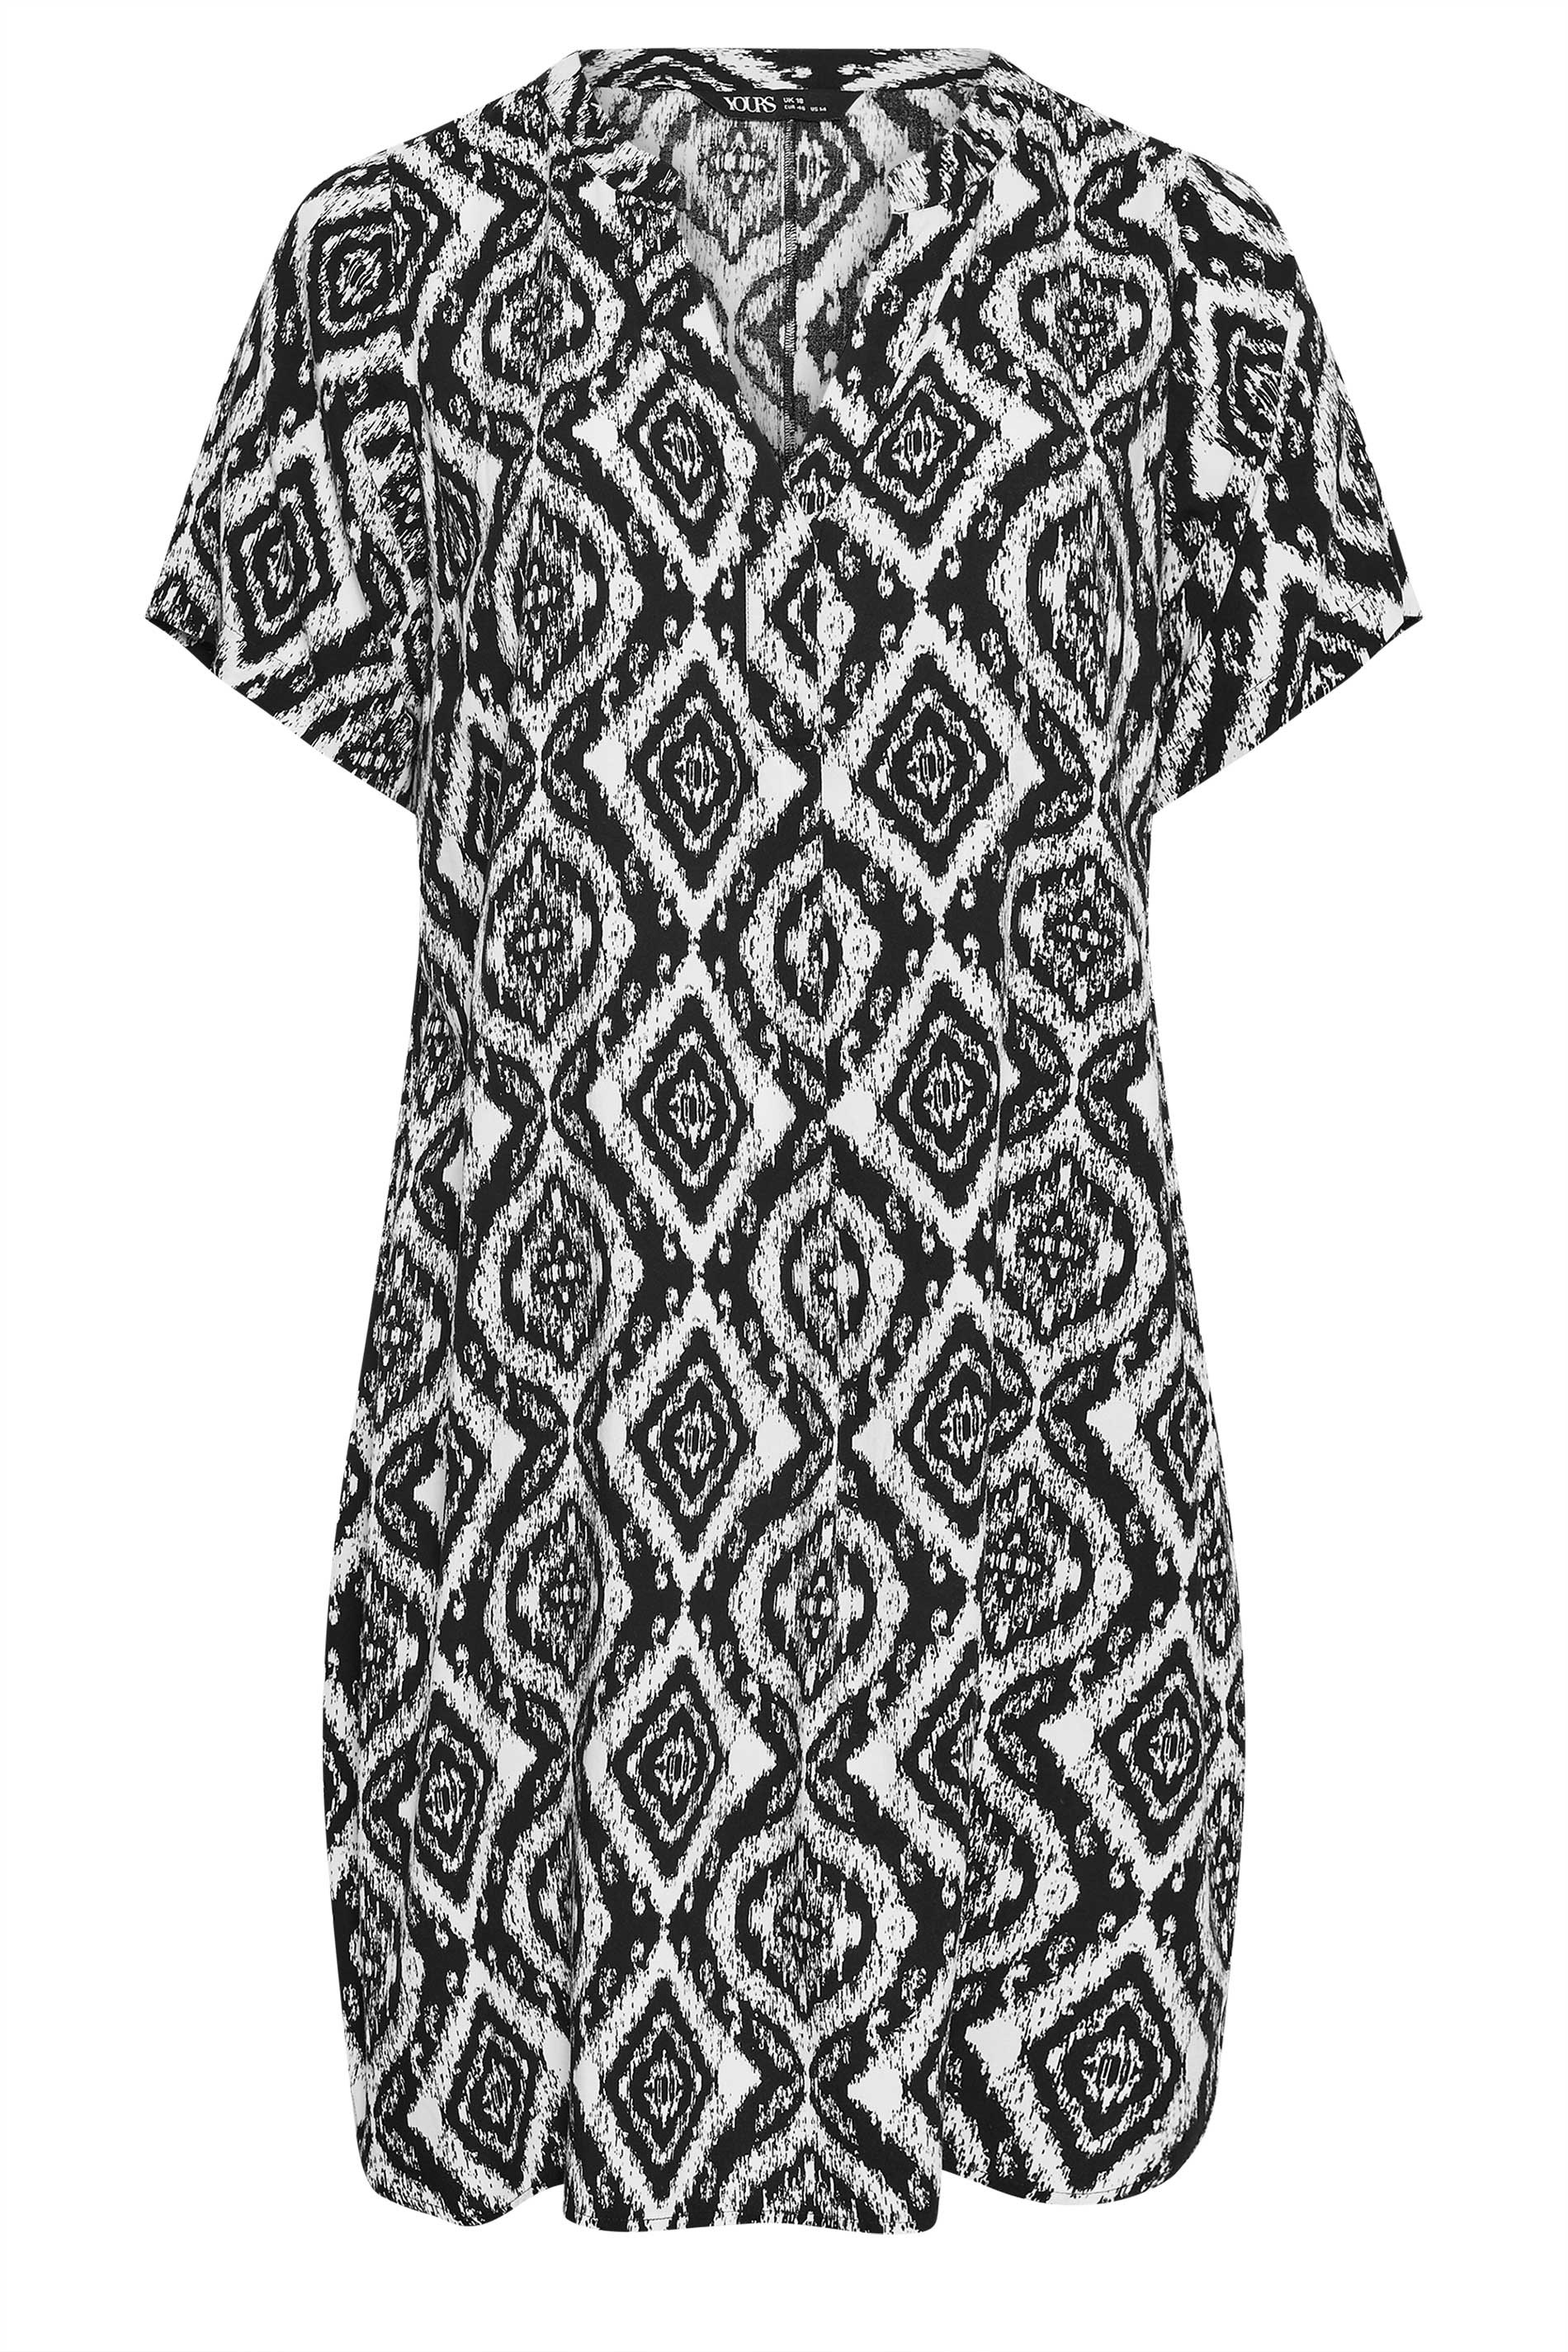 Yours Plus Size Black & White Aztec Print Tunic Dress | Yours Clothing 3